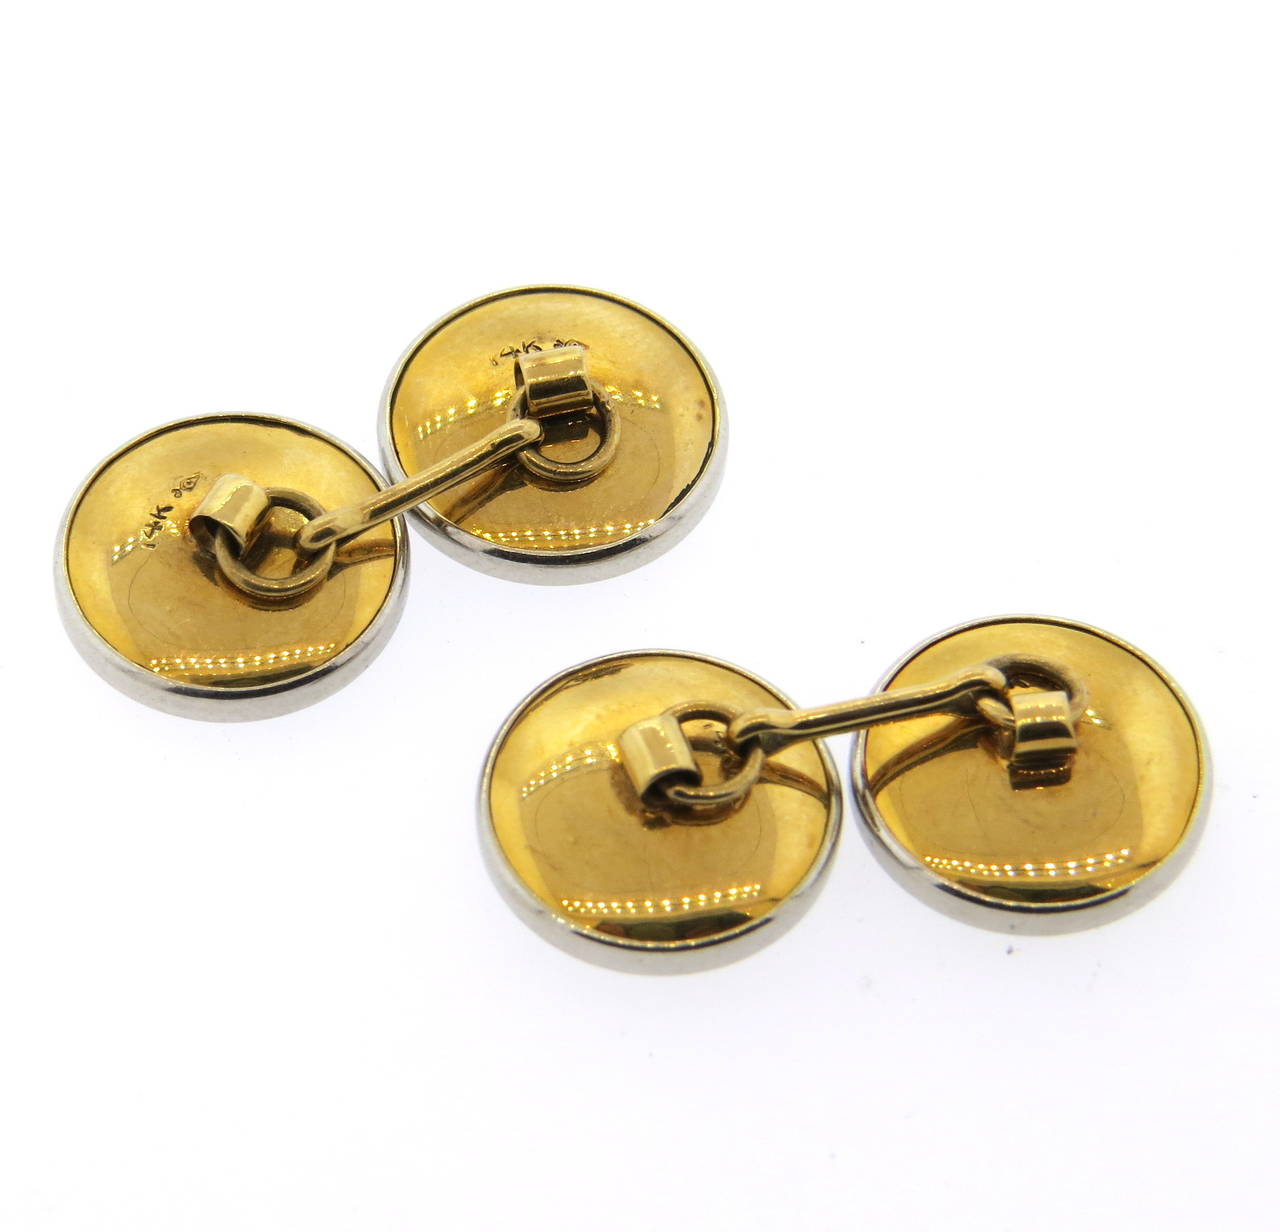 Art Deco 14k gold and platinum top cufflinks, set with black onyx. Top measures 13.6mm in diameter. Weight - 5.2 grams